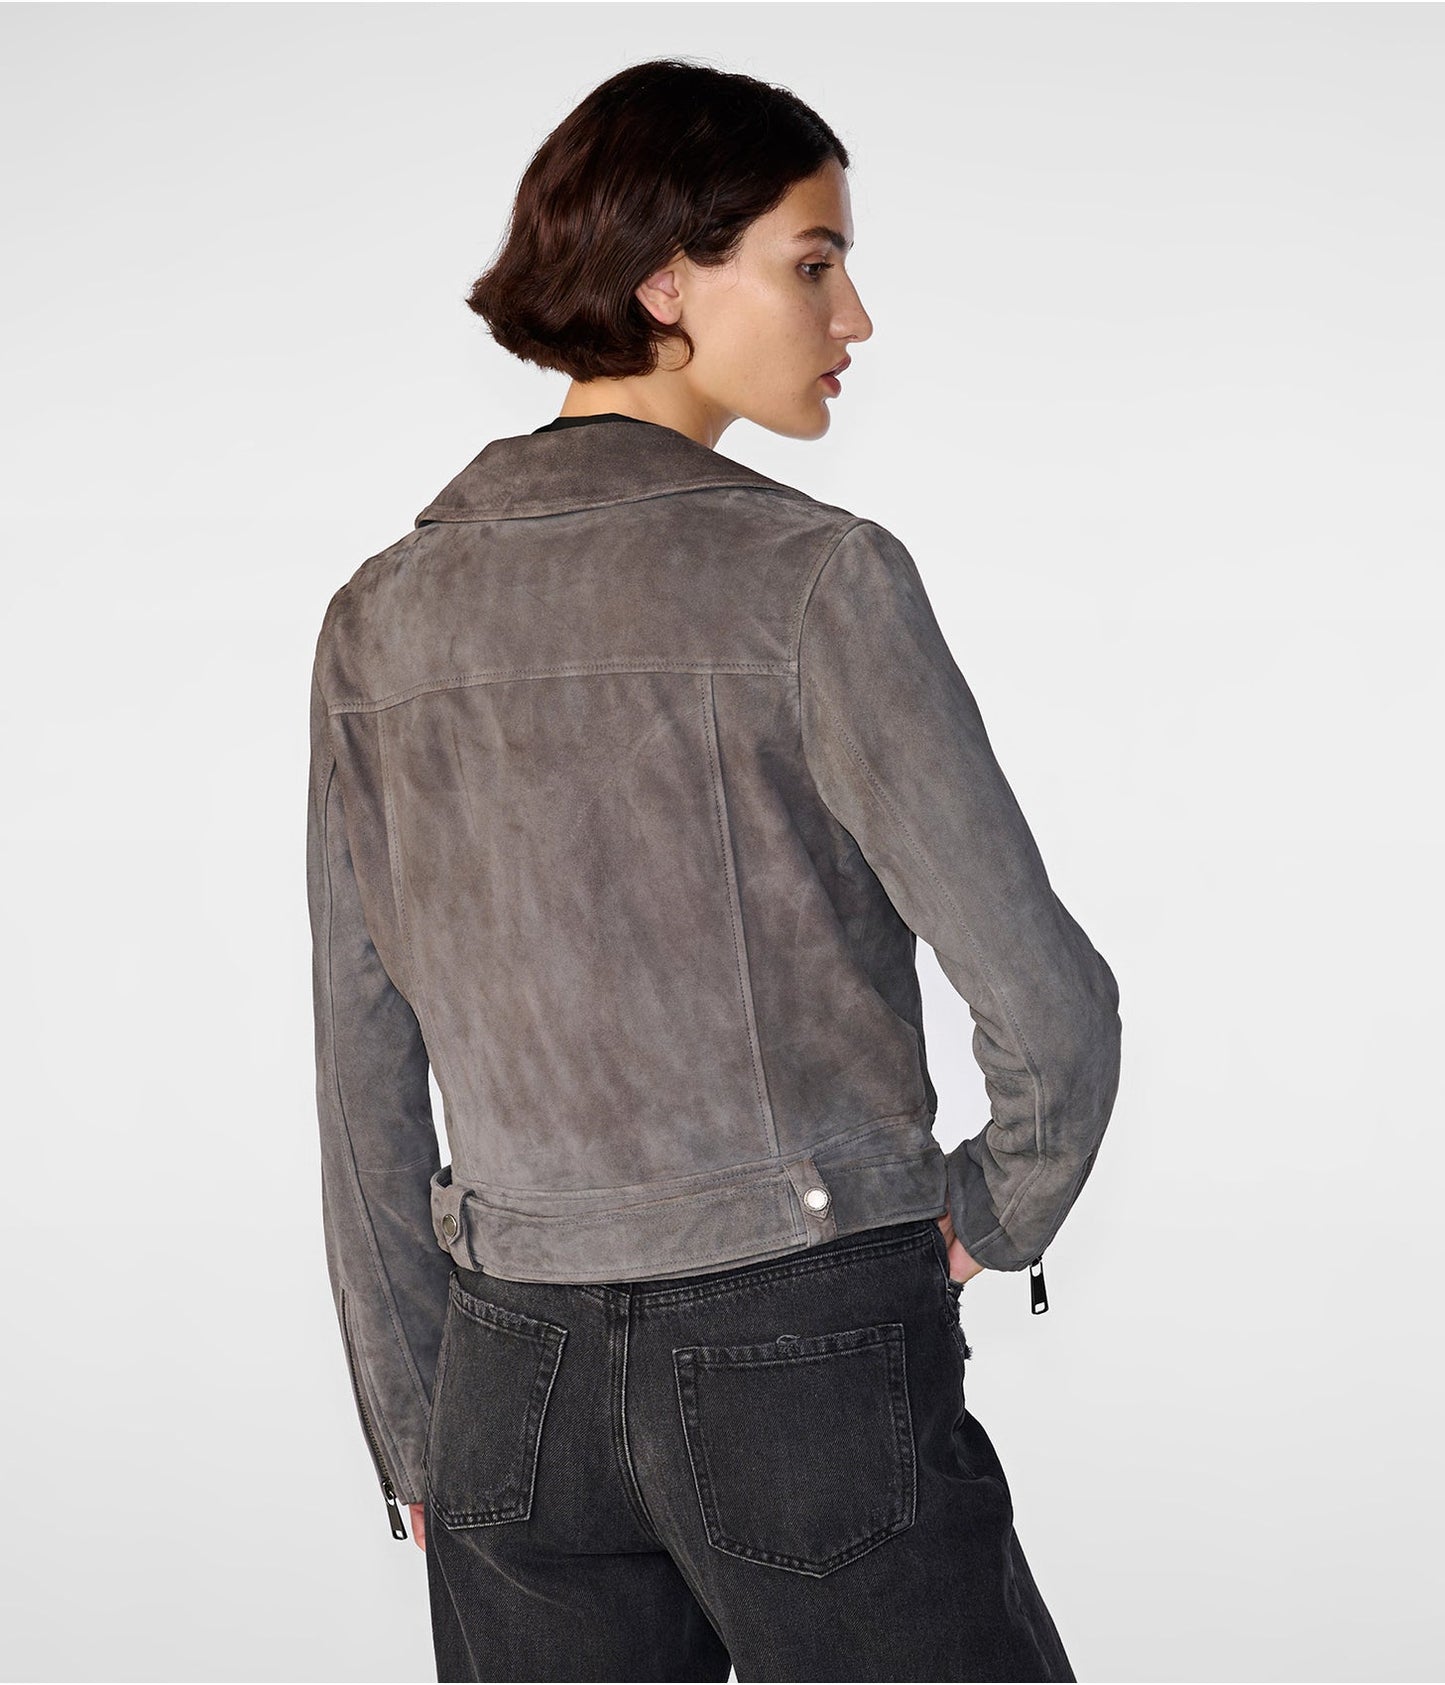 Women's Gray Suede Leather Biker Jacket